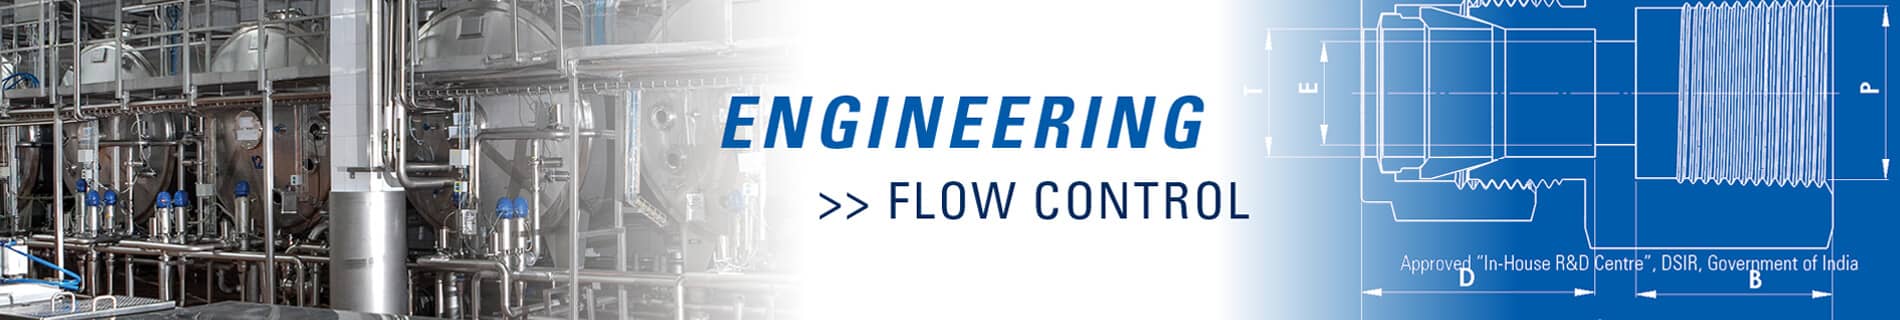 Engineering Flow Control